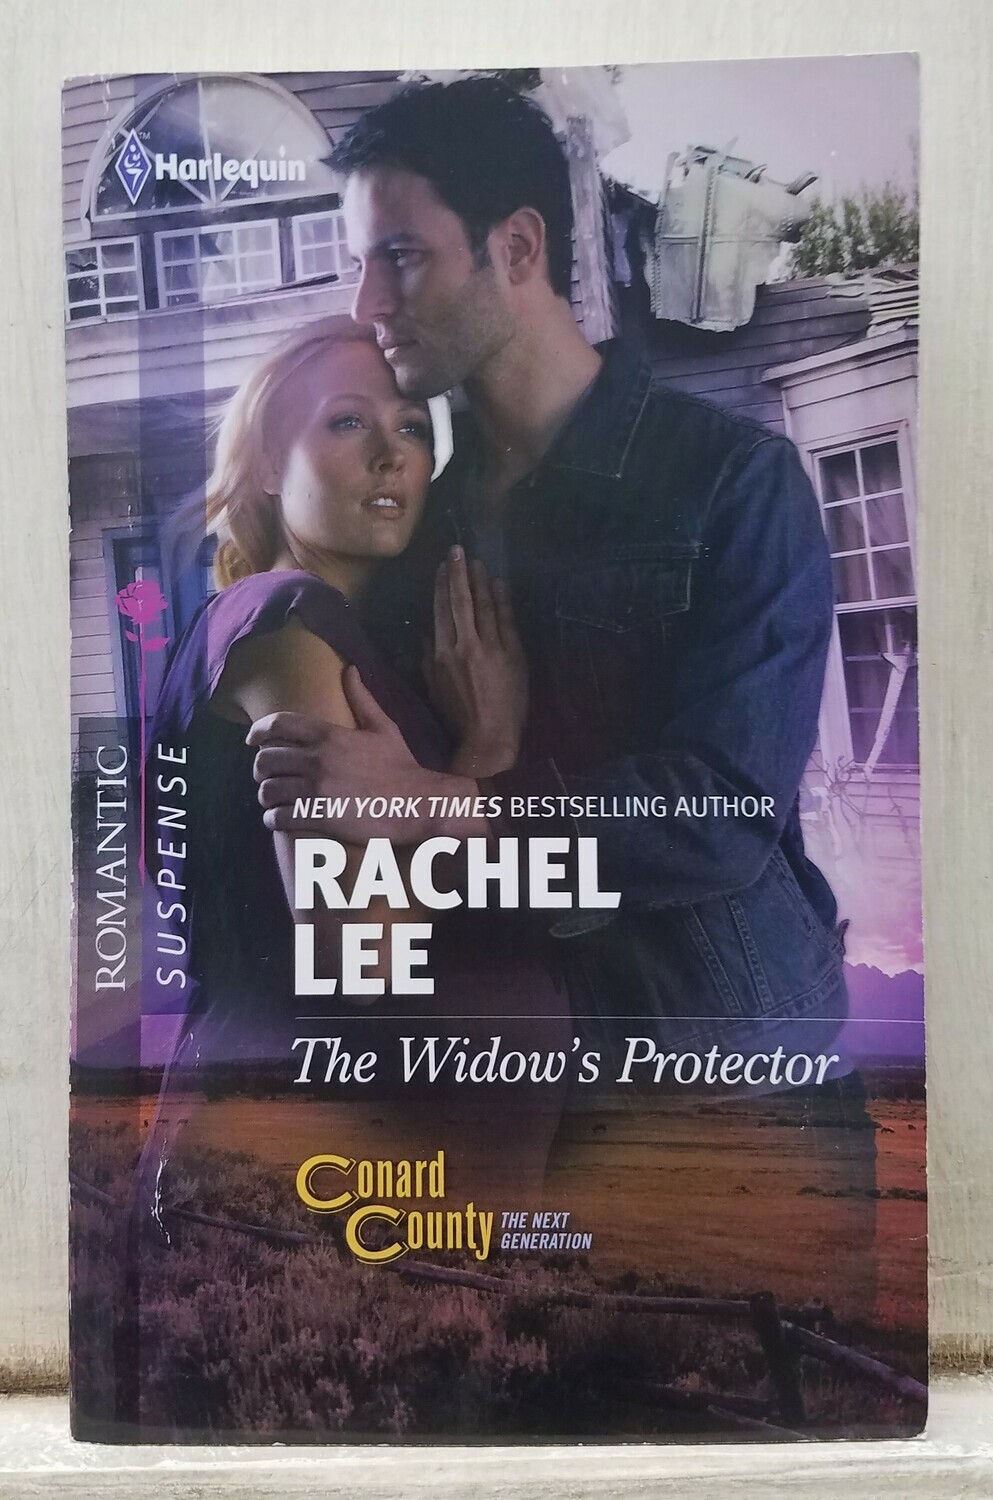 The Widow's Protector by Rachel Lee